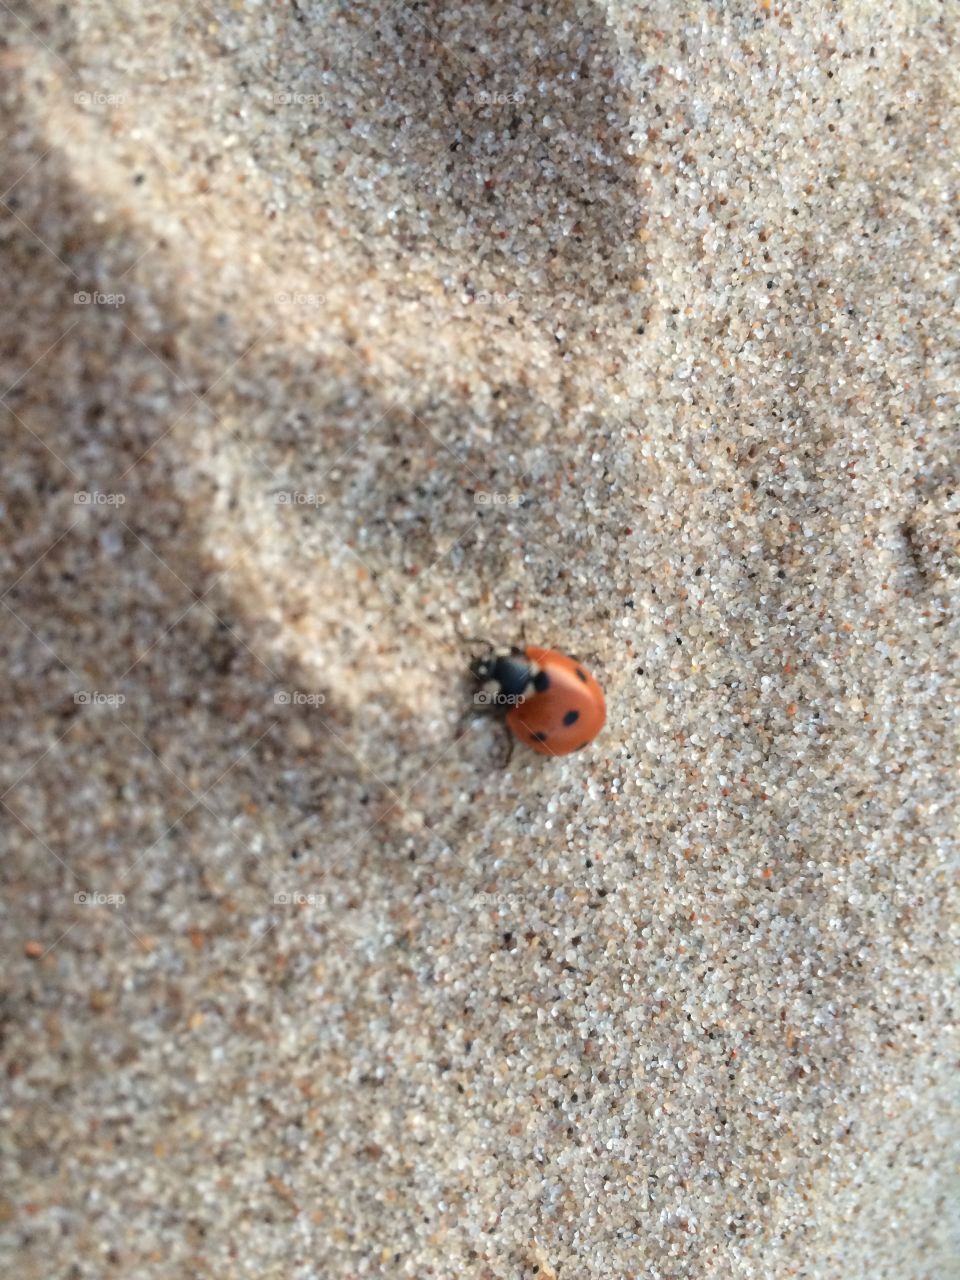 A tiny ladybug 